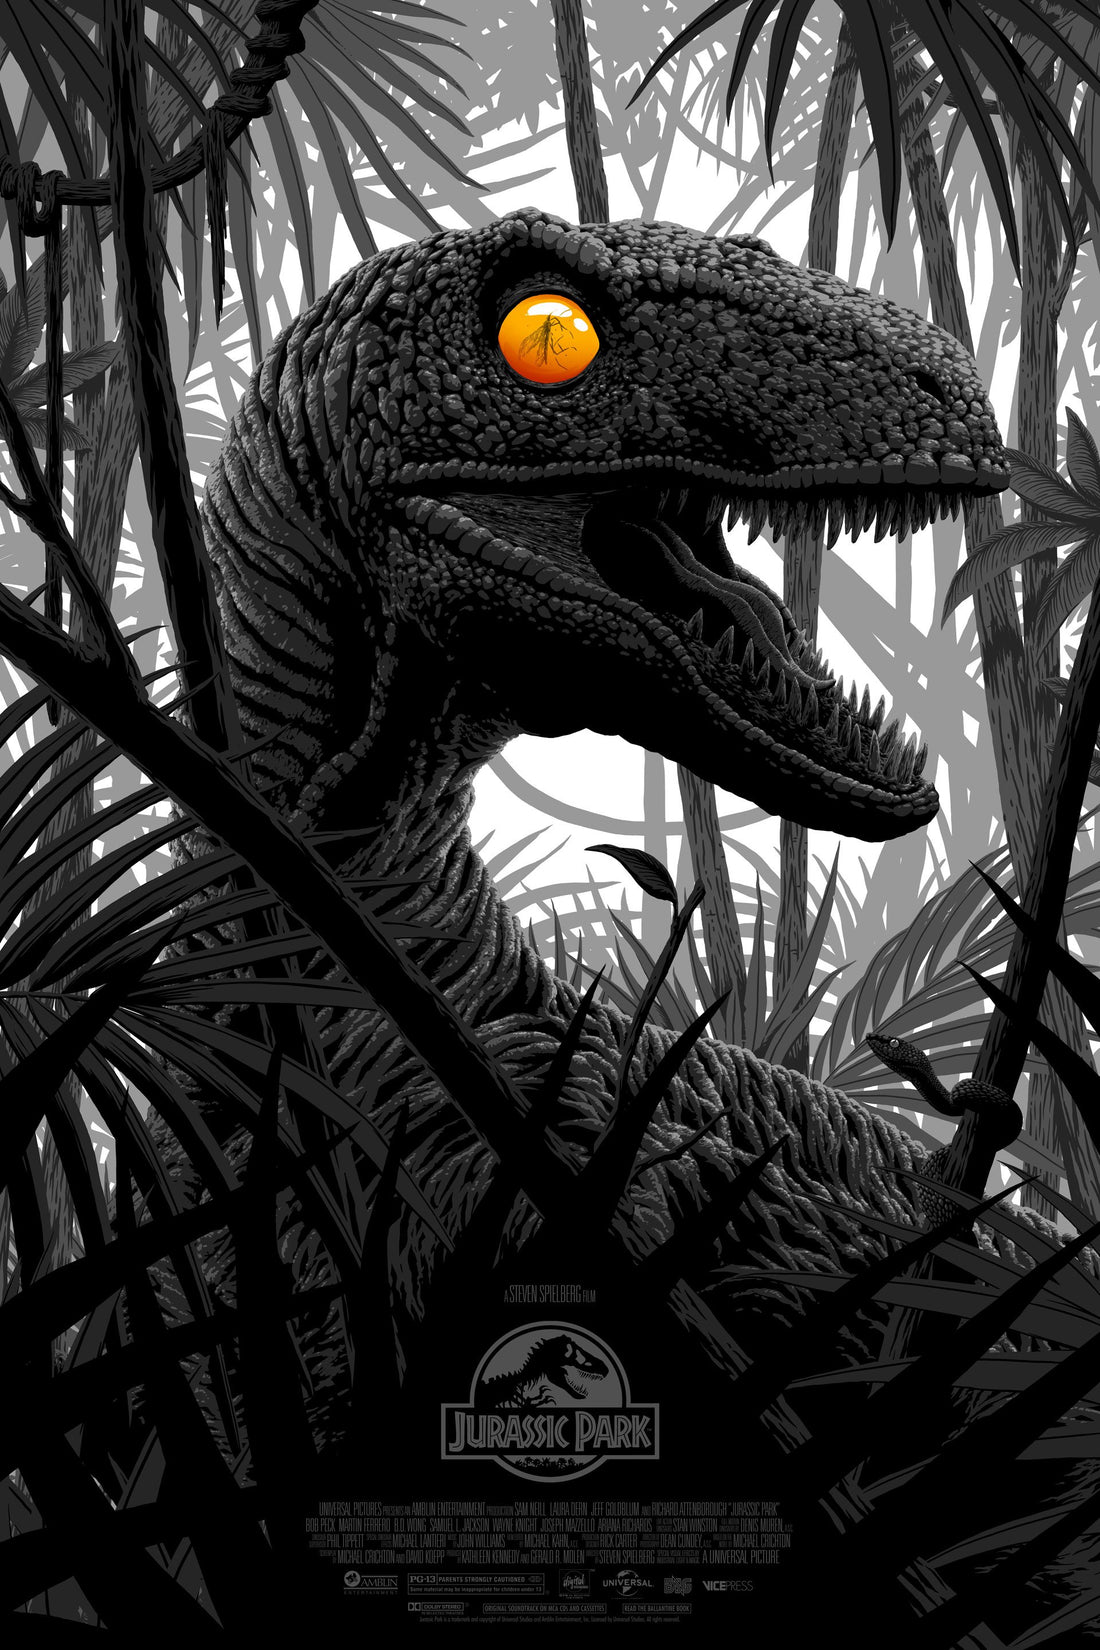 Jurassic Park Florey Alternative Movie Poster Variant